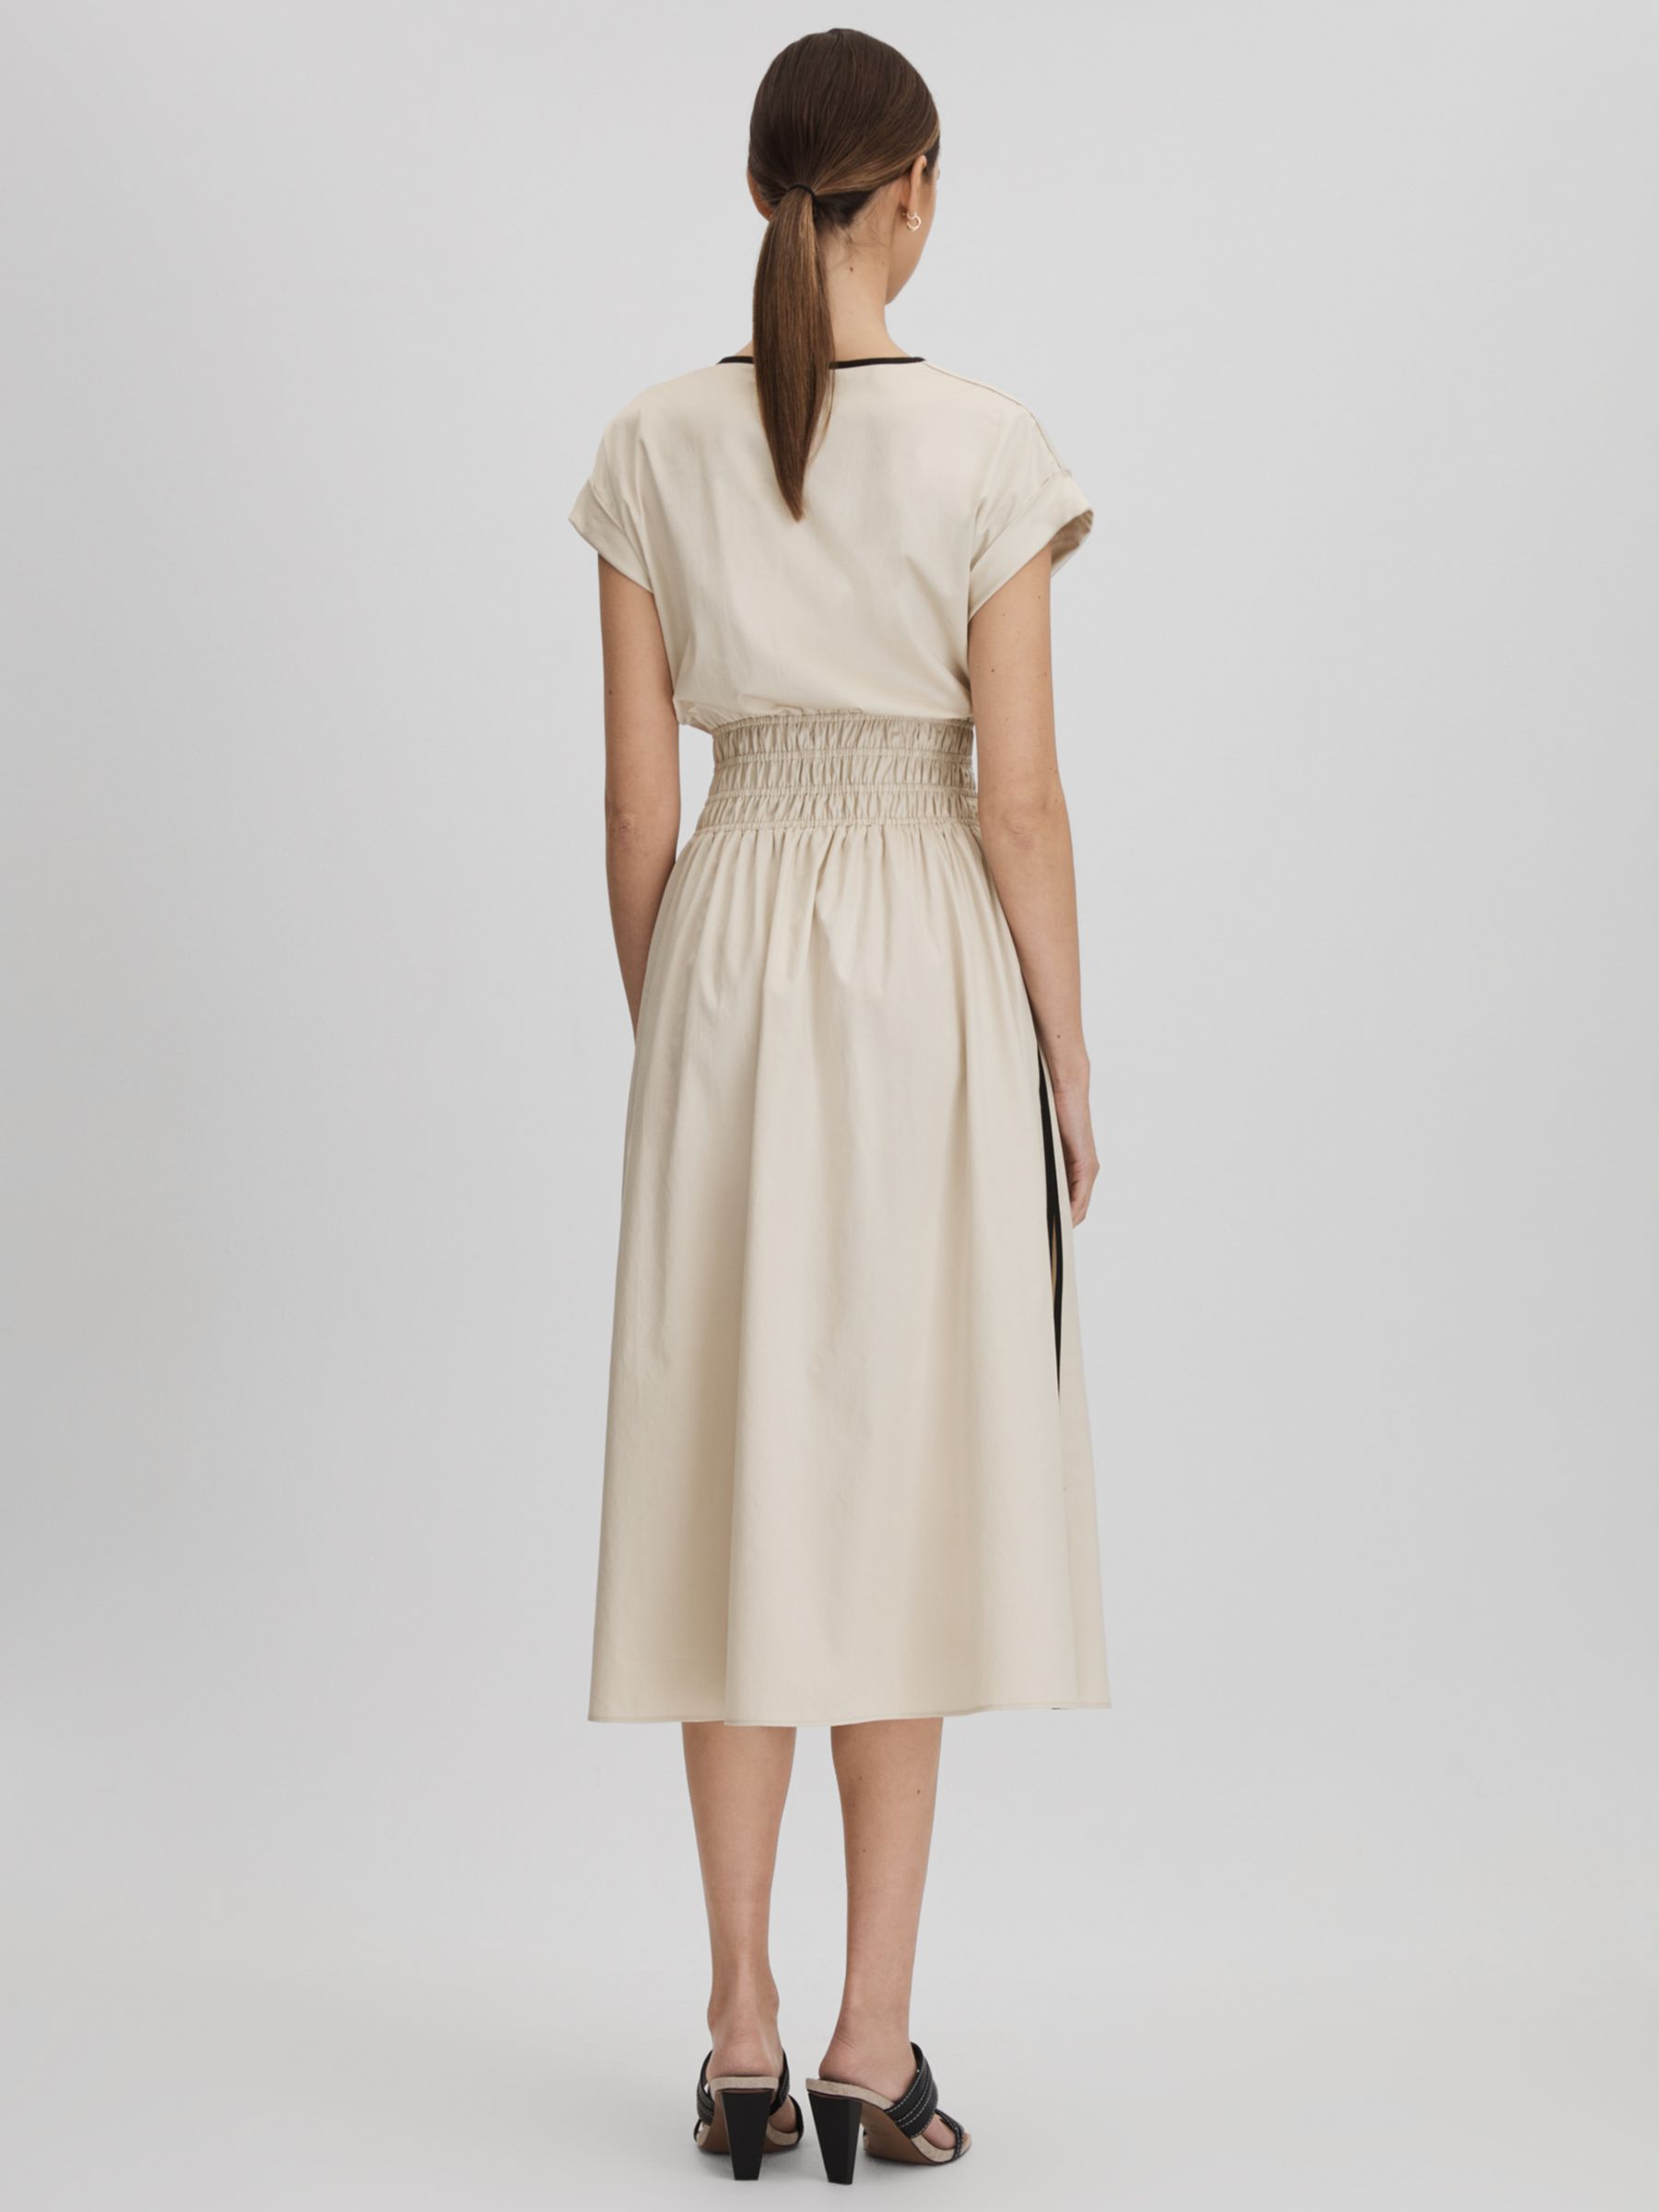 Reiss Lena Ruched Waist Contrast Trim Cotton Midi Dress, Neutral/Black, 10